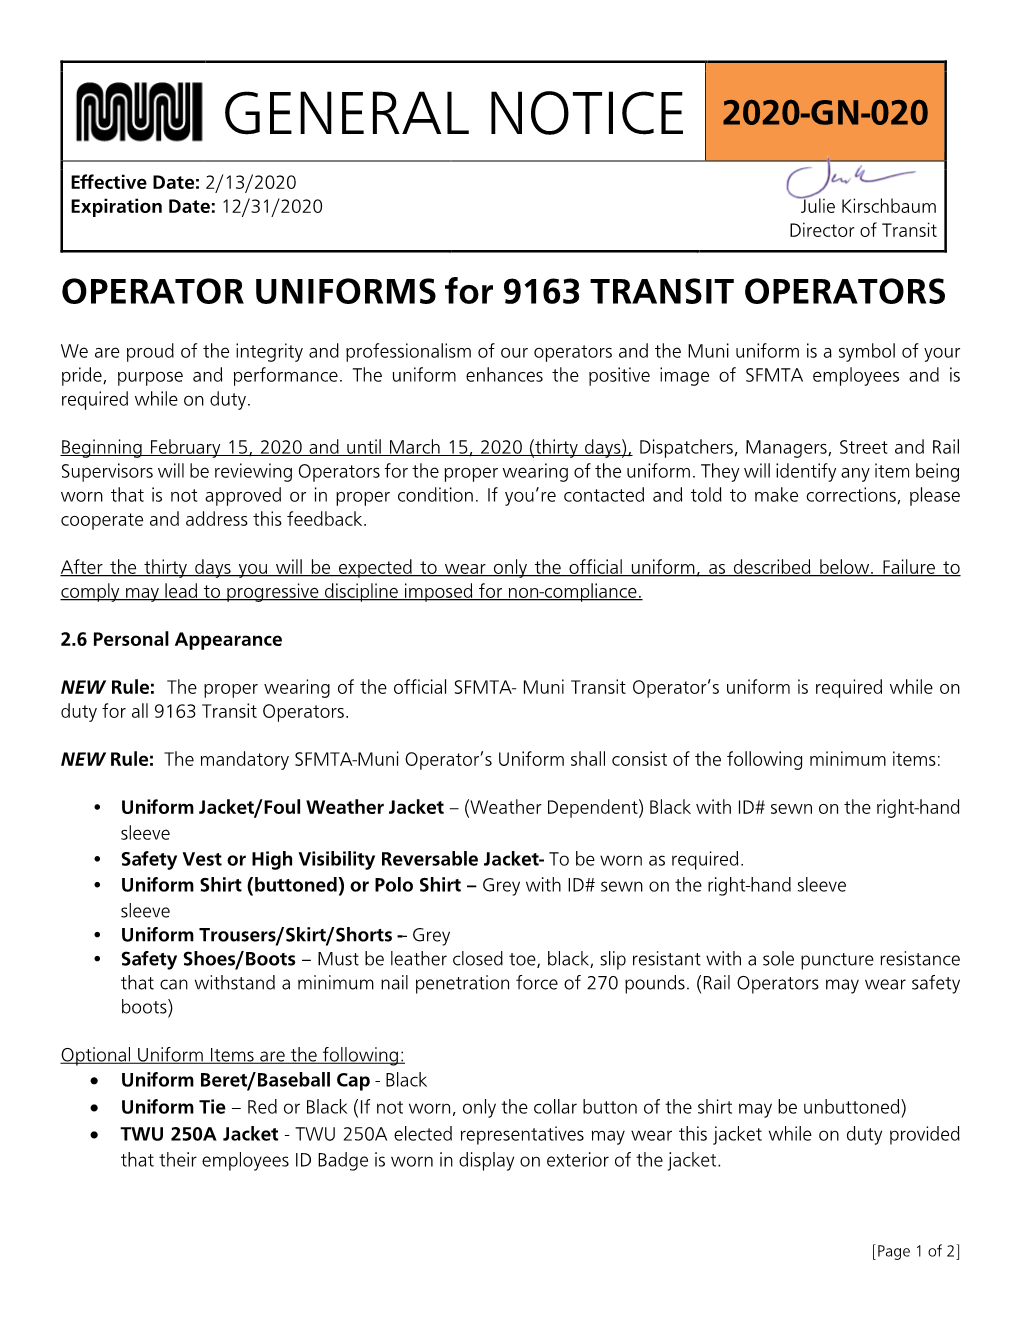 2020-GN-020 Operator Uniform for 9163 Transit Operators